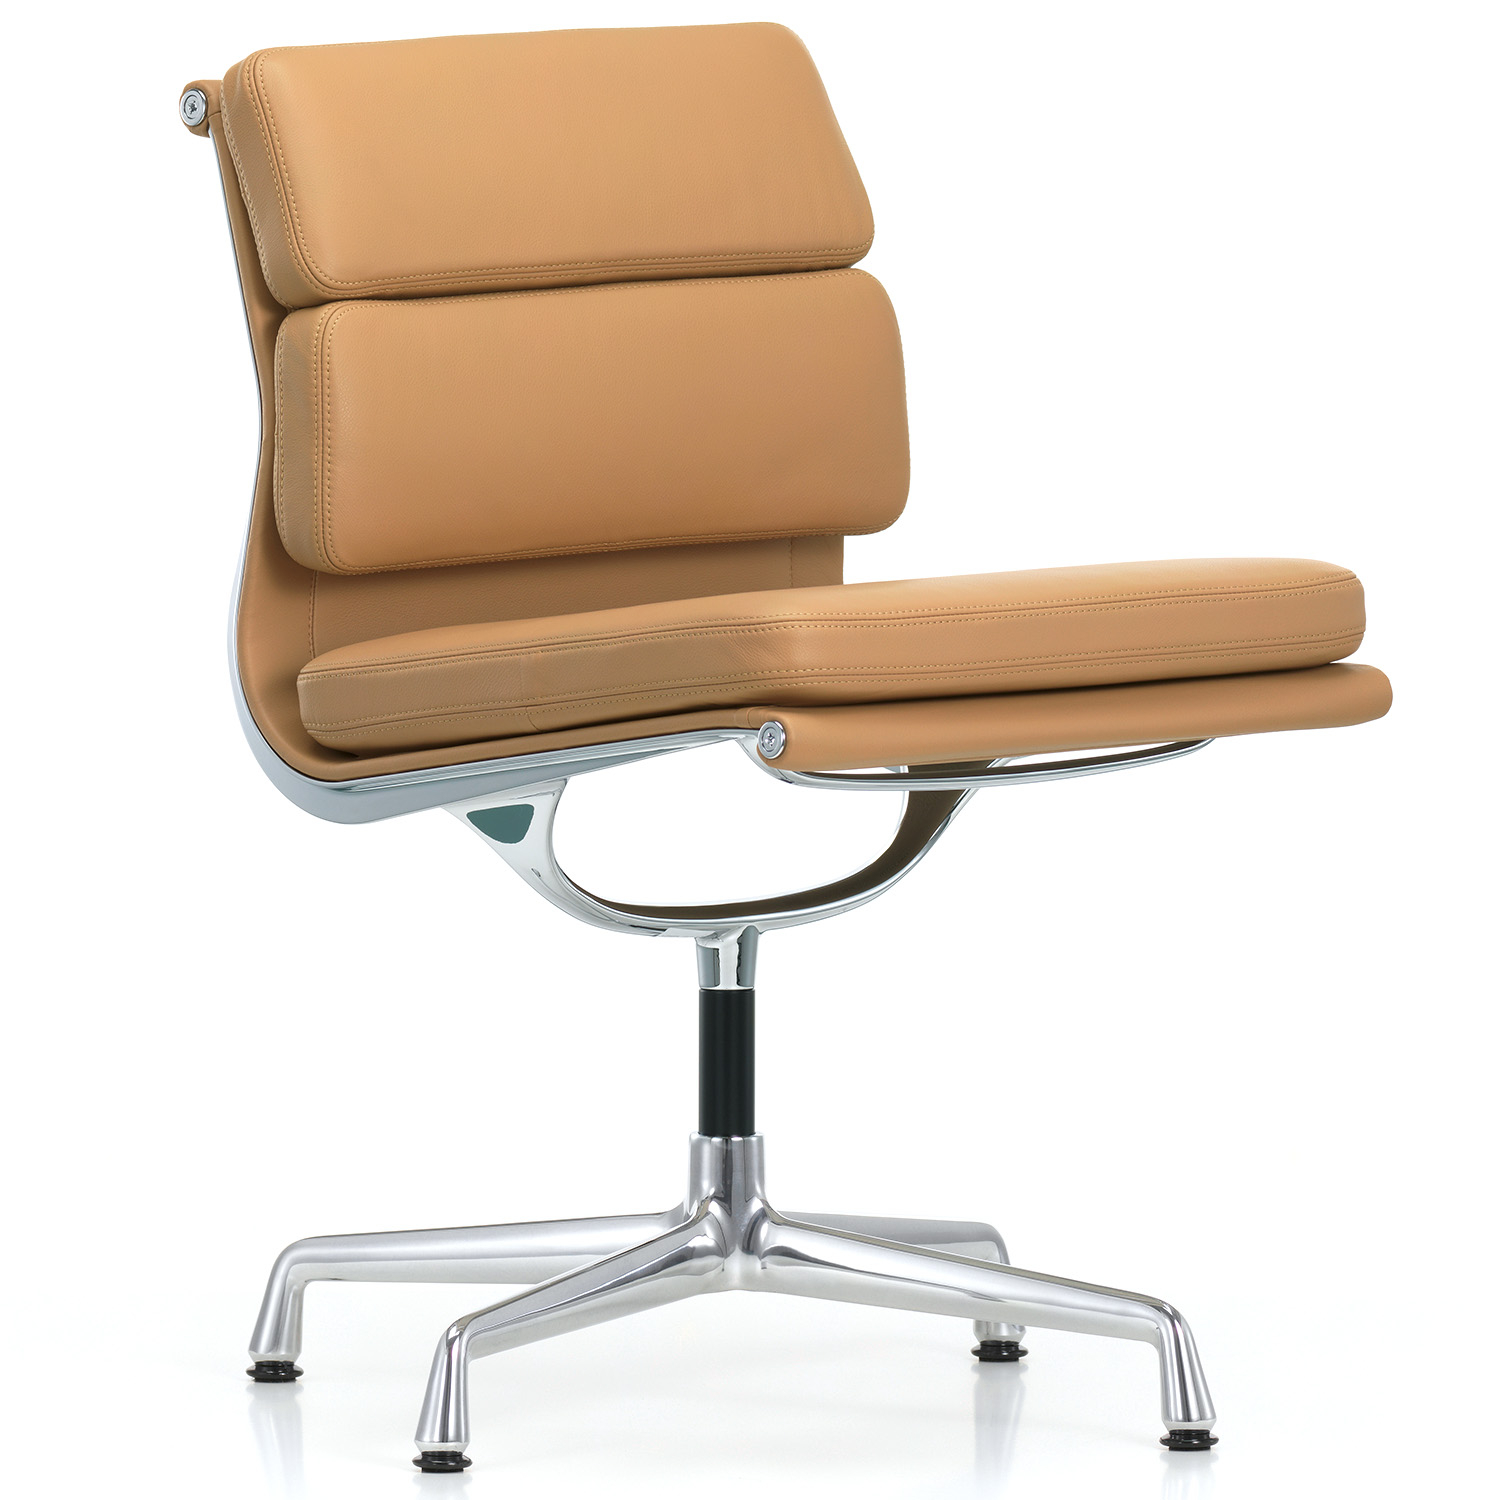 Vitra designové židle Soft Pad Chair EA 205